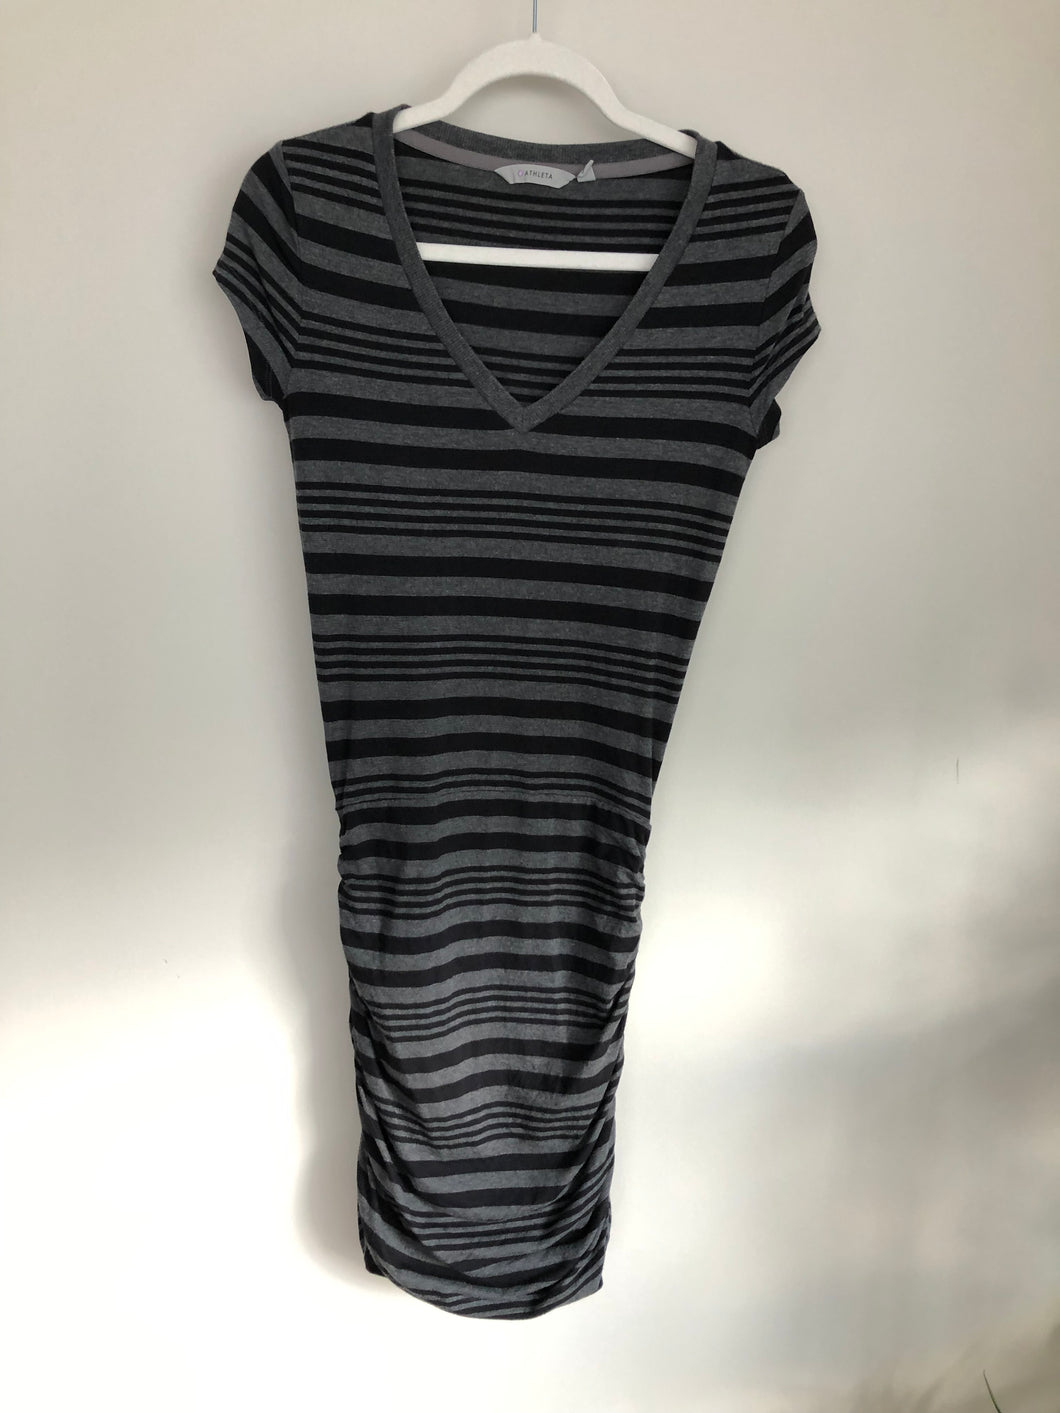 Athleta Topanga Black/Gray Striped Ruched Athletic Dress Adult XS